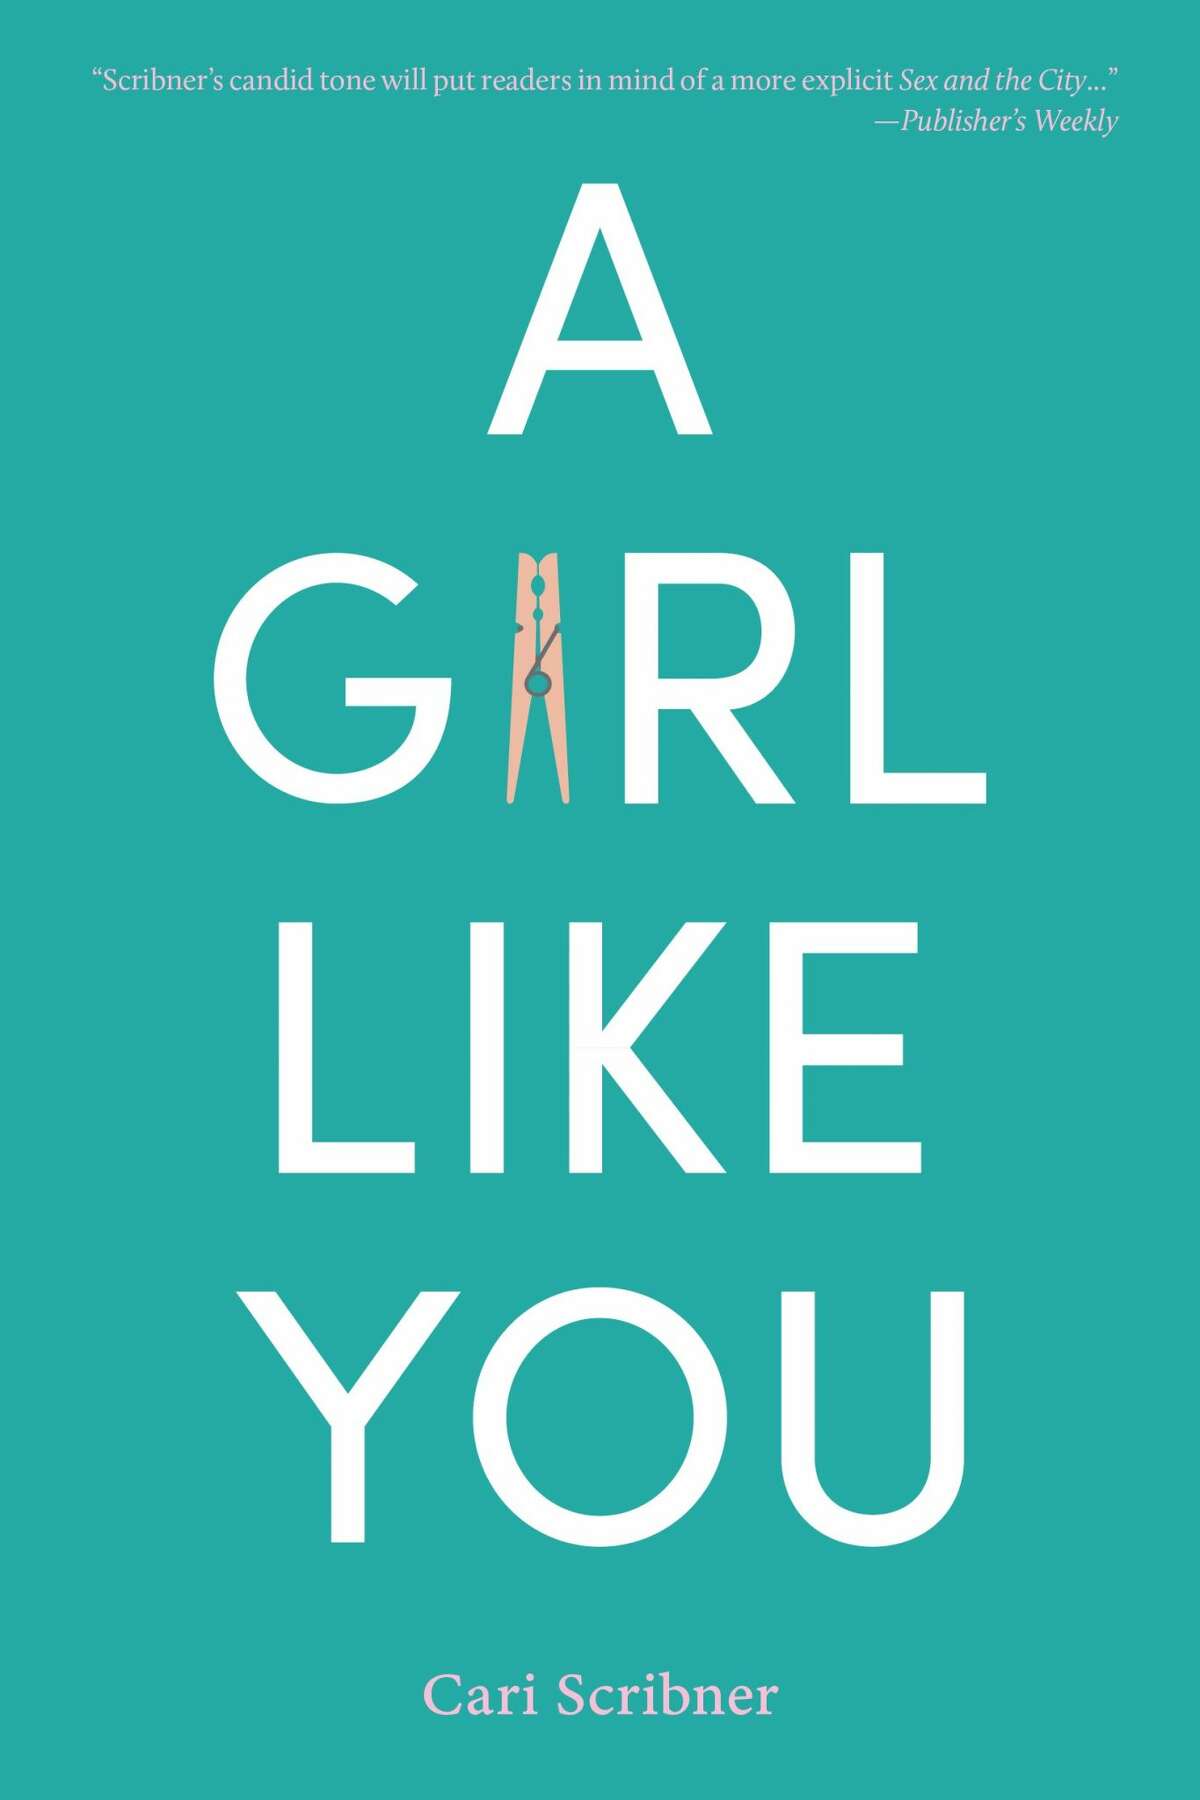 Journalist-turned-novelist Cari Scribner recently released "A Girl Like You."